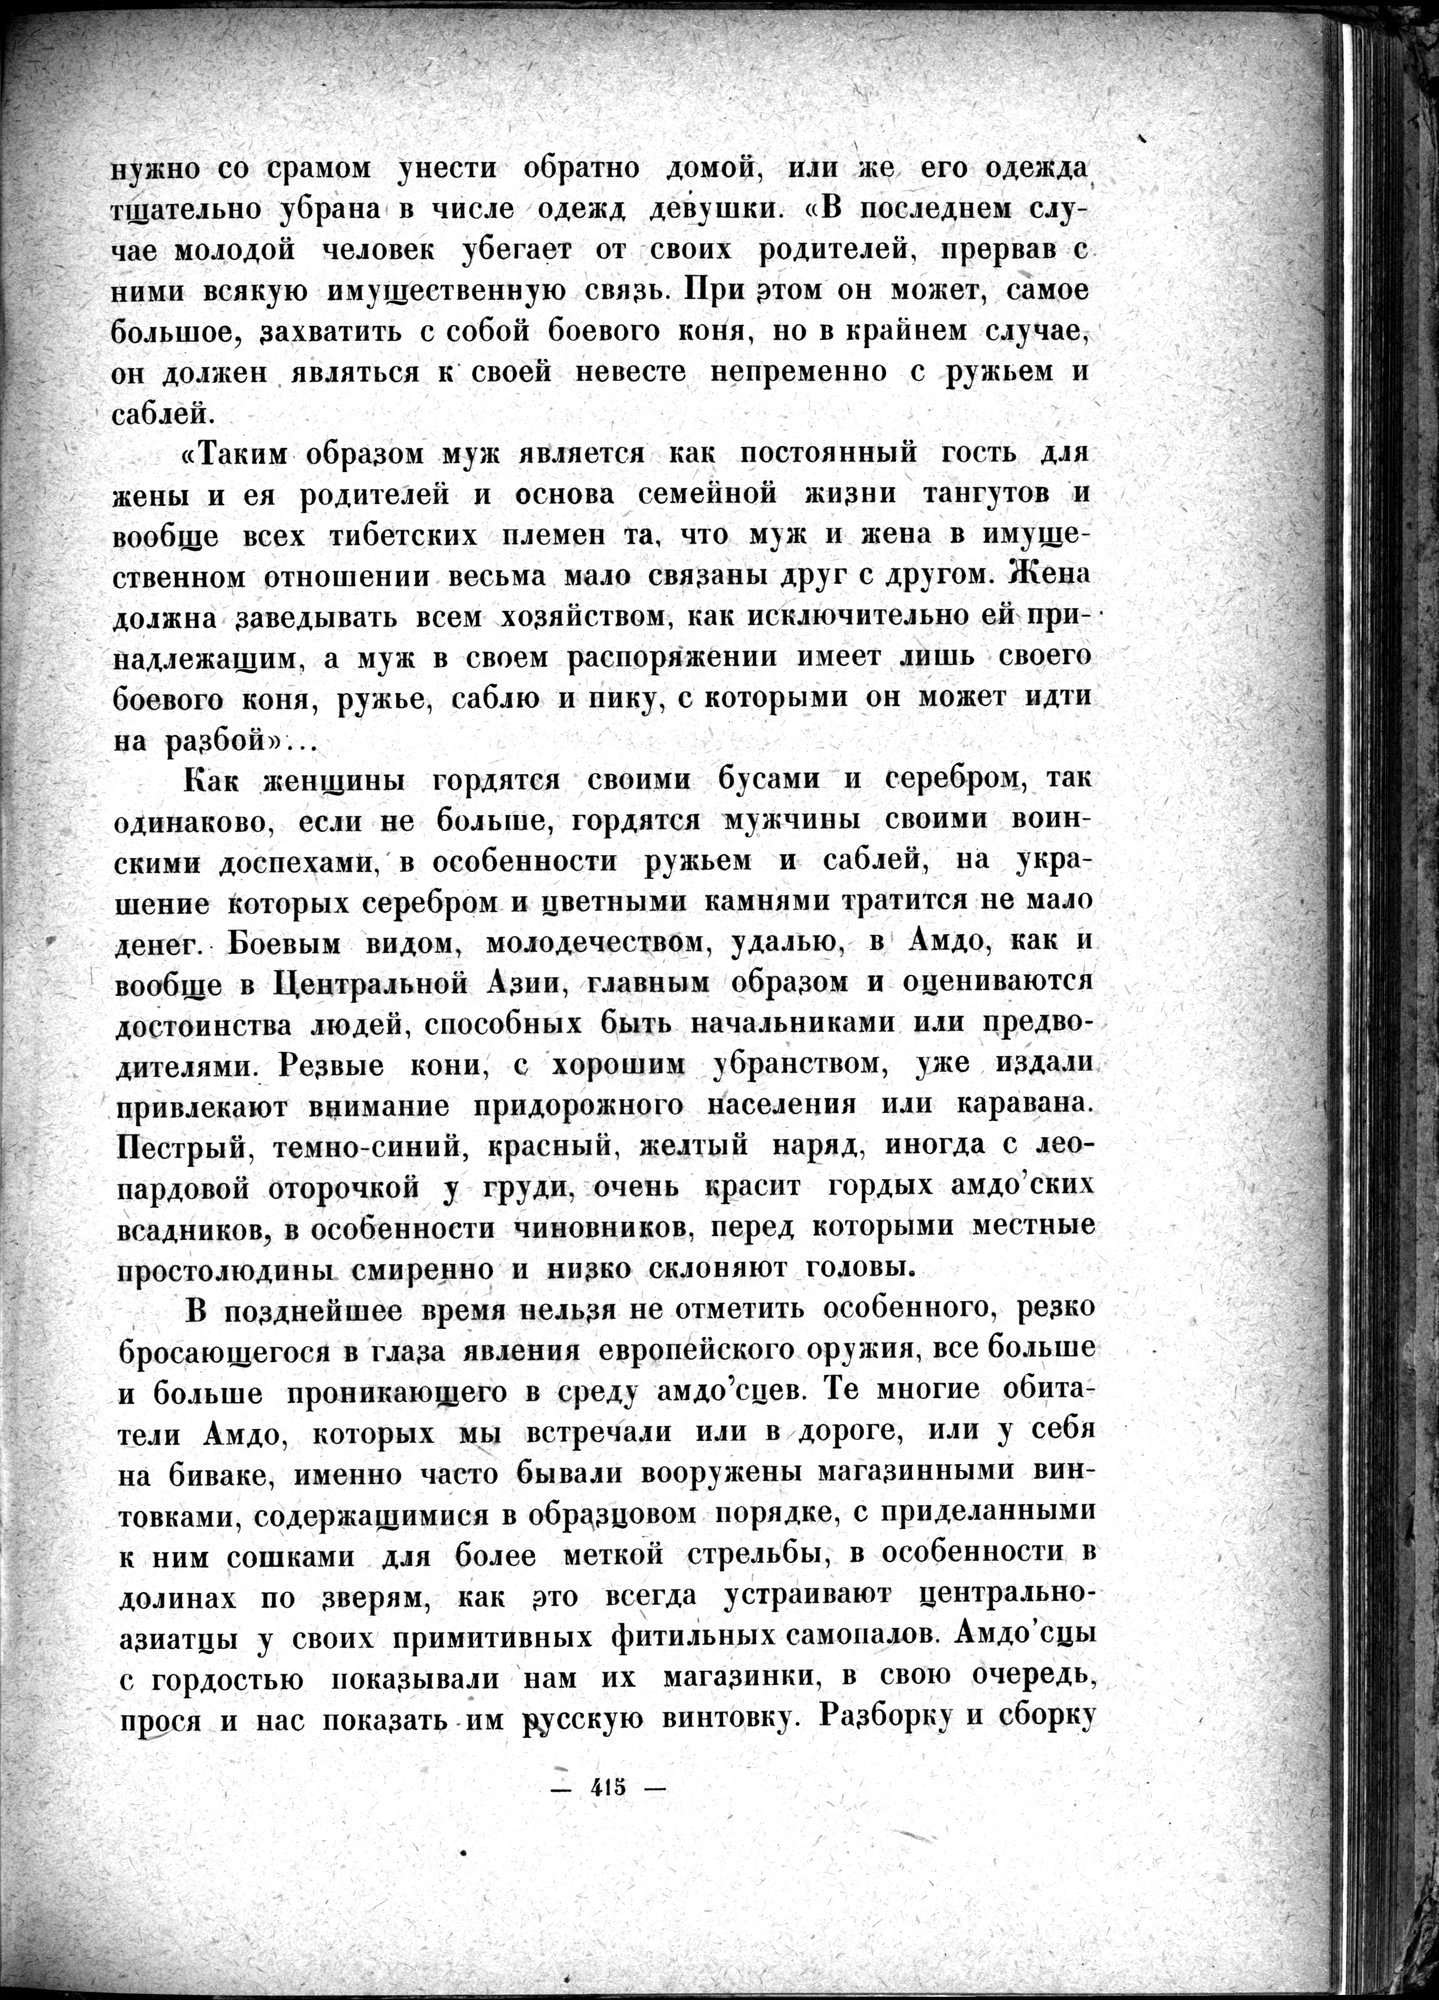 Mongoliya i Amdo i mertby gorod Khara-Khoto : vol.1 / Page 477 (Grayscale High Resolution Image)